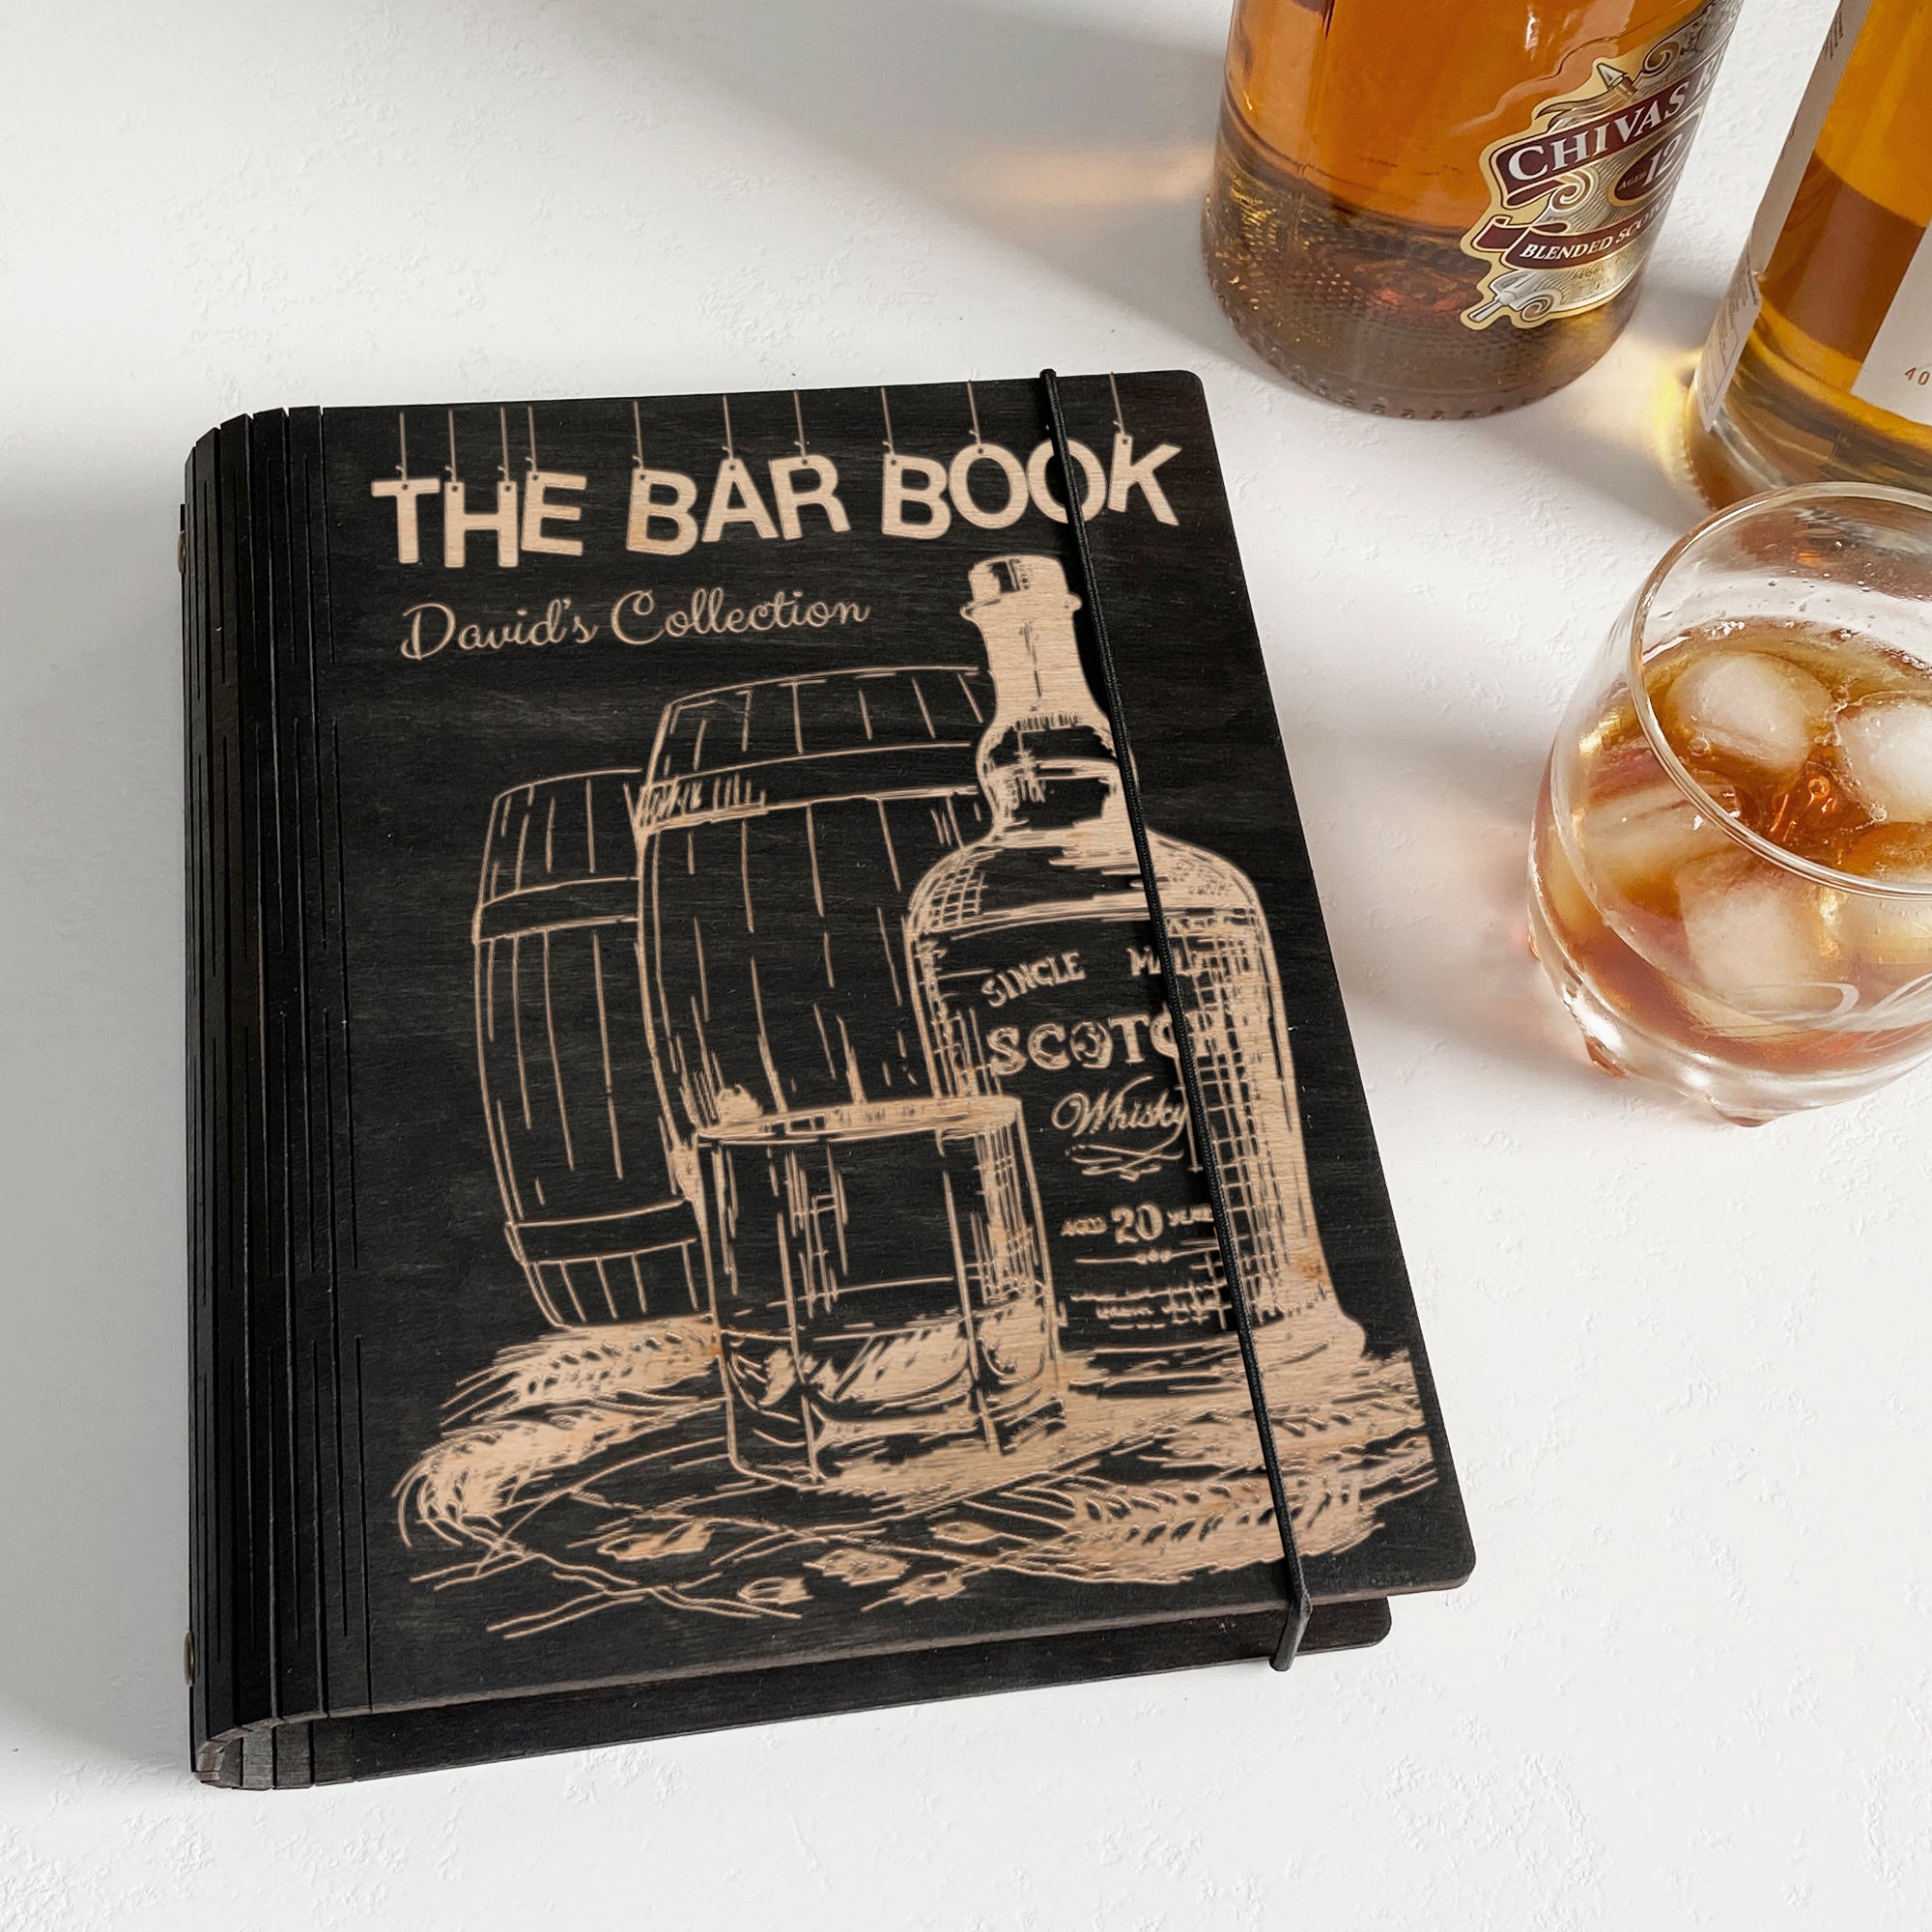 My Bar book Free custom engraving